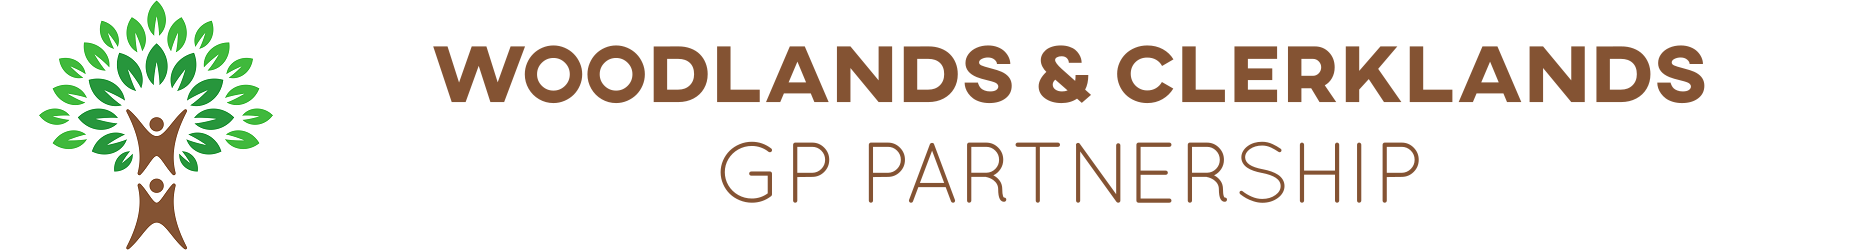 Woodlands & Clerklands Partnership 